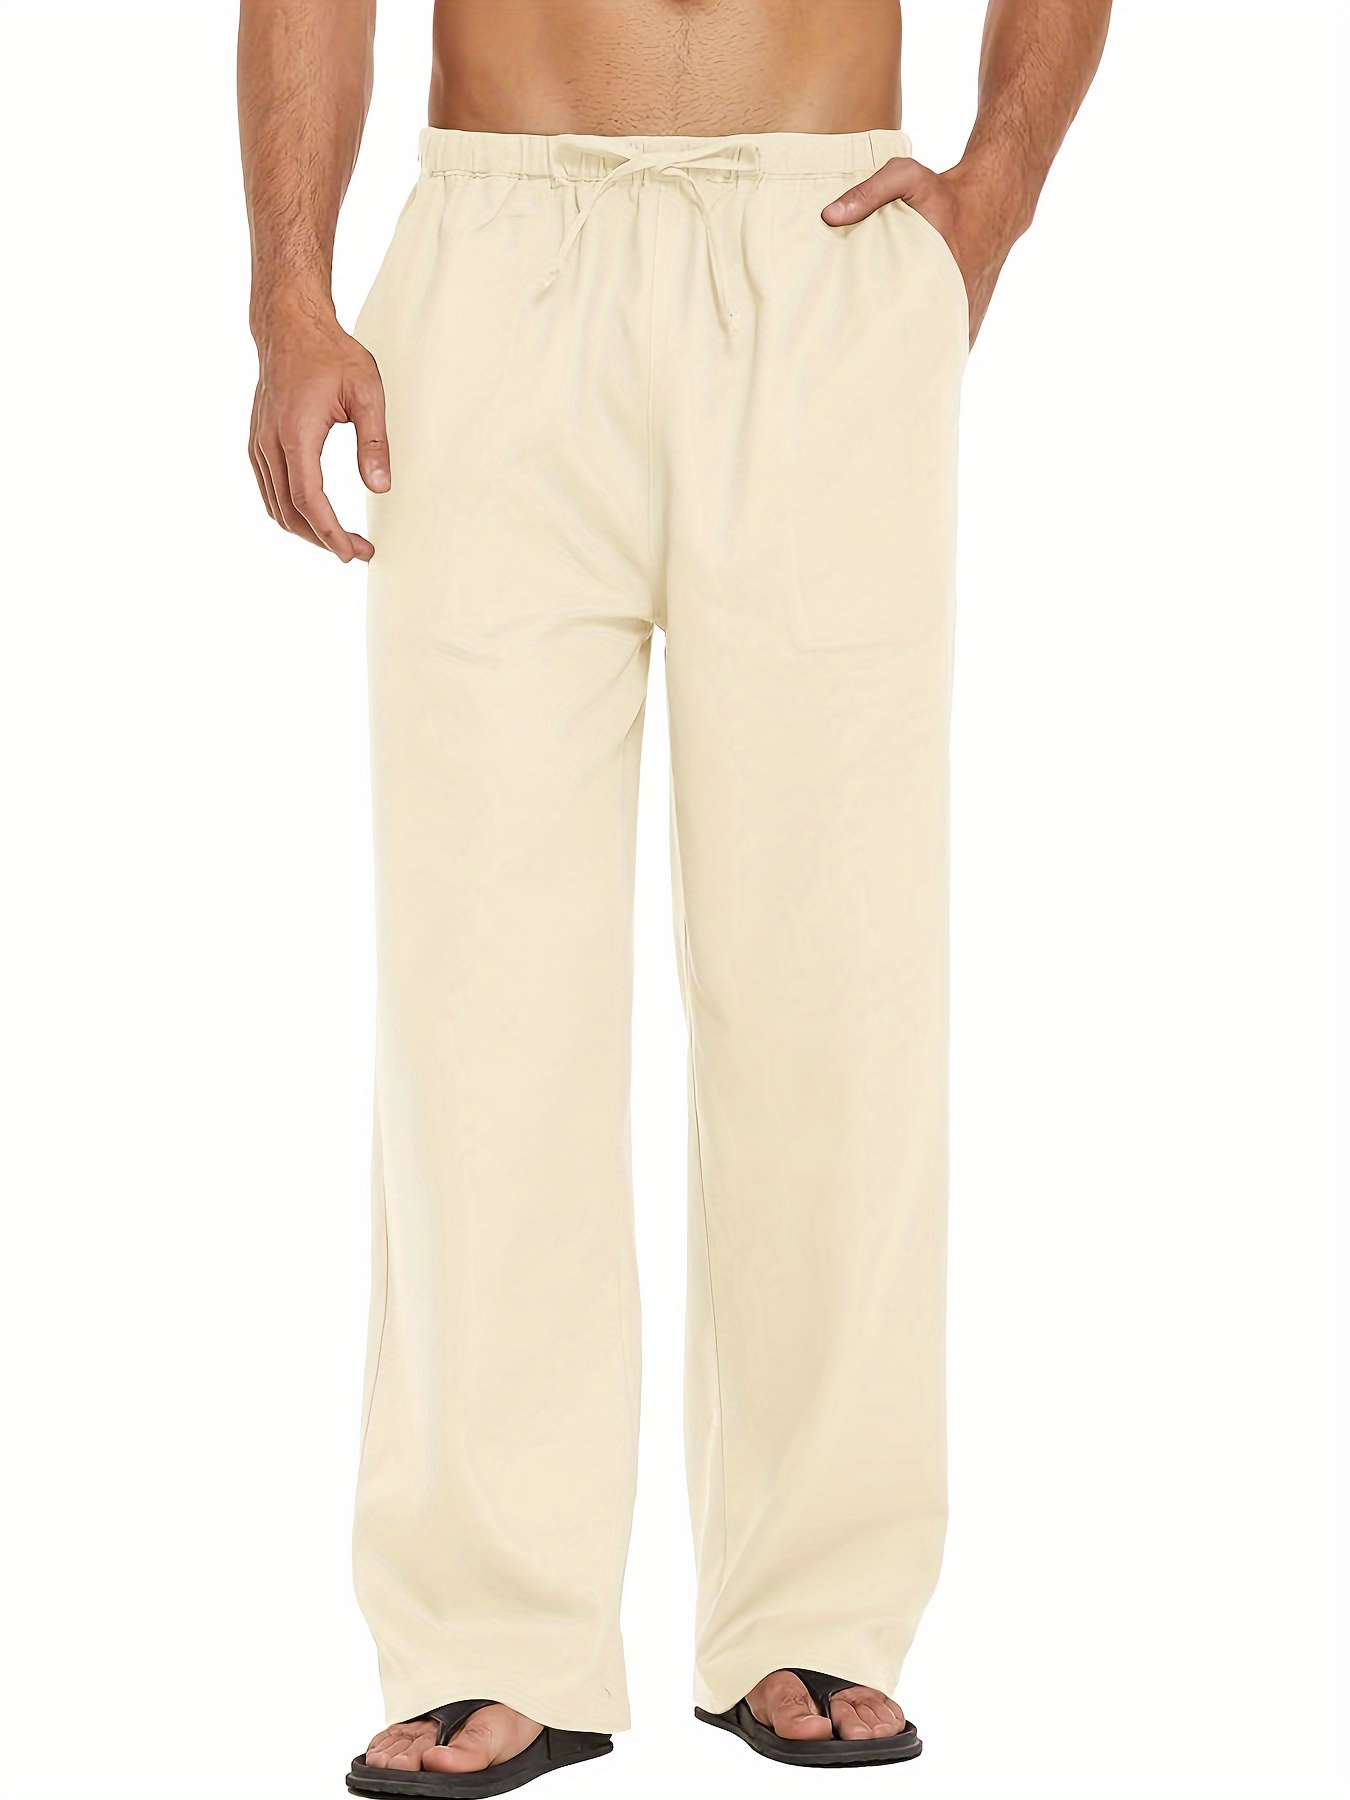 Drawstring Pants for Women Casual Cotton Linen Pants Elastic Waist Pants  Soft Trousers with Pockets Straight Leg Pants